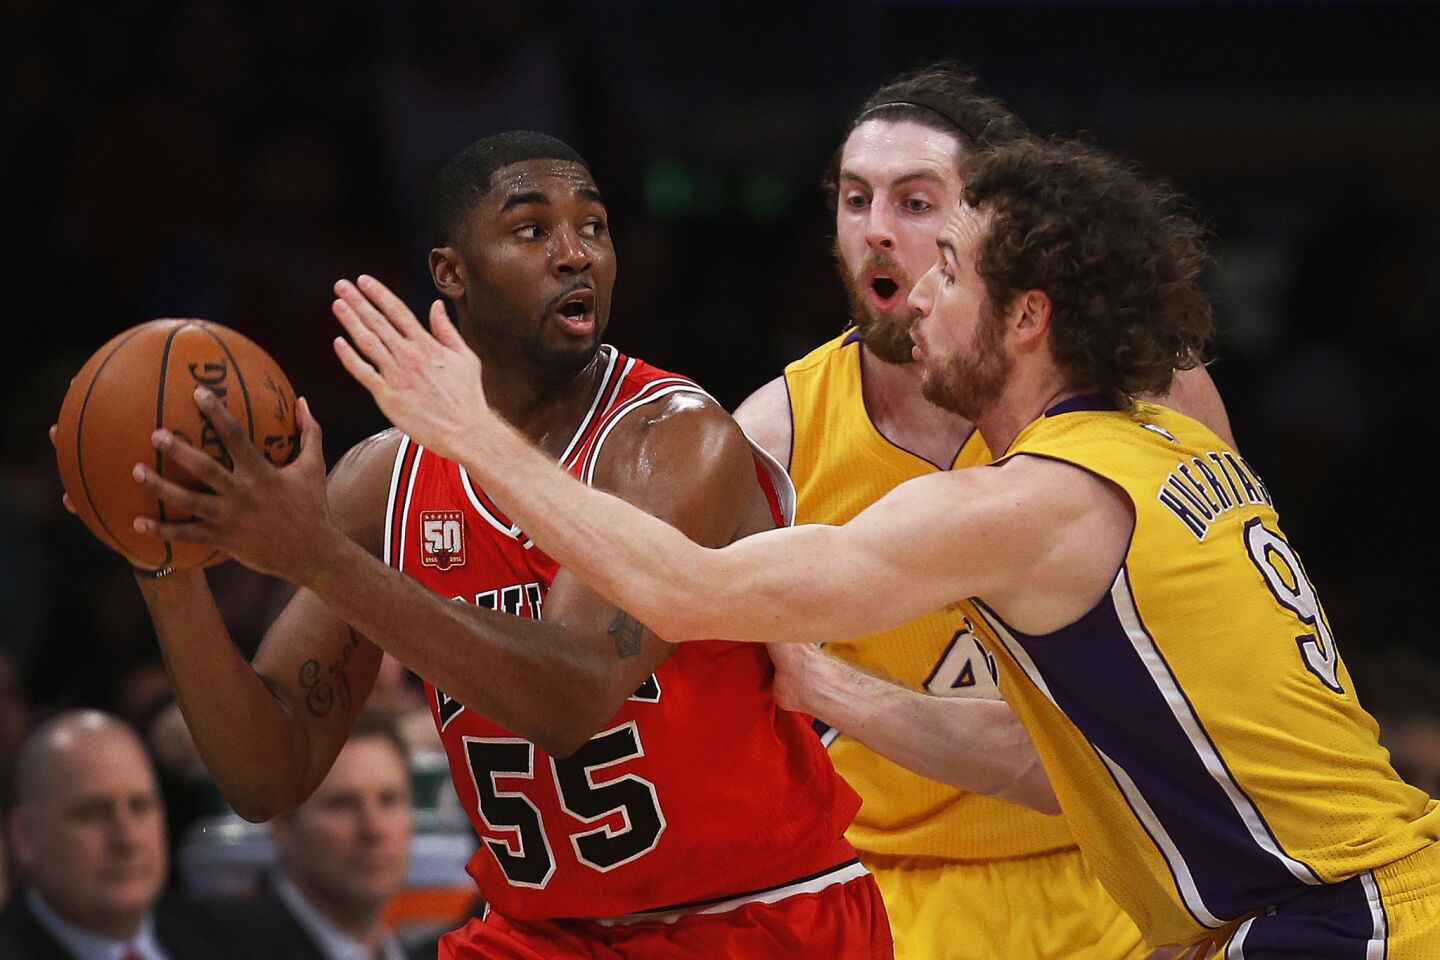 Bulls guard E'Twaun Moore is pressured by Lakers defenders Ryan Kelly and Marcelo Huertas.